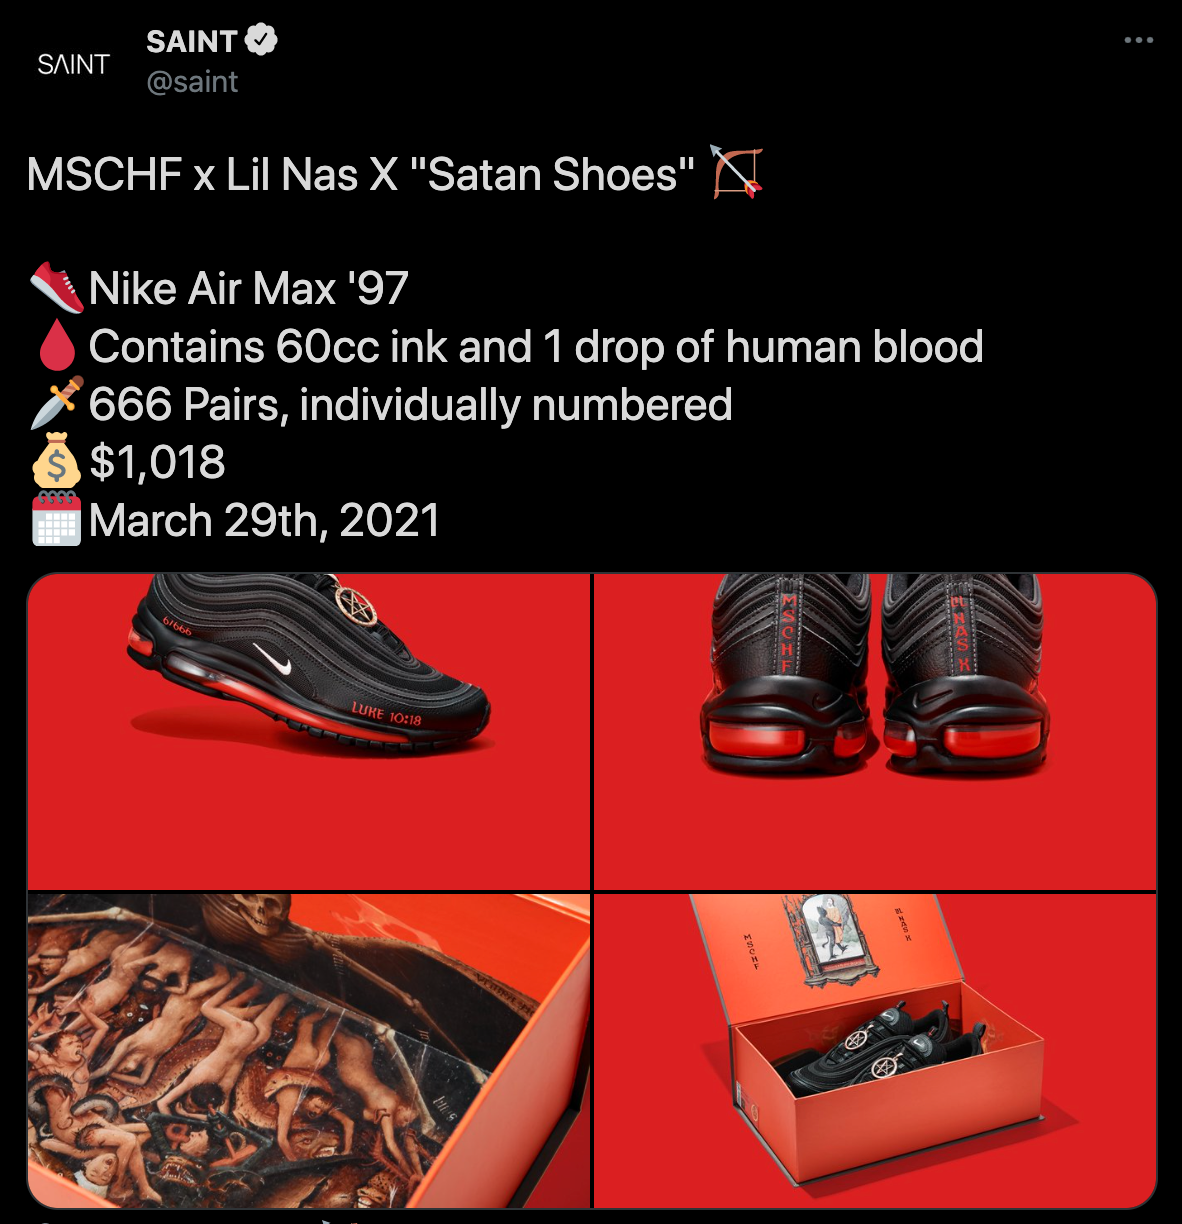 lil nas x nike satan shoes -- Saint Mschf x Lil Nas X satan shoes nikes